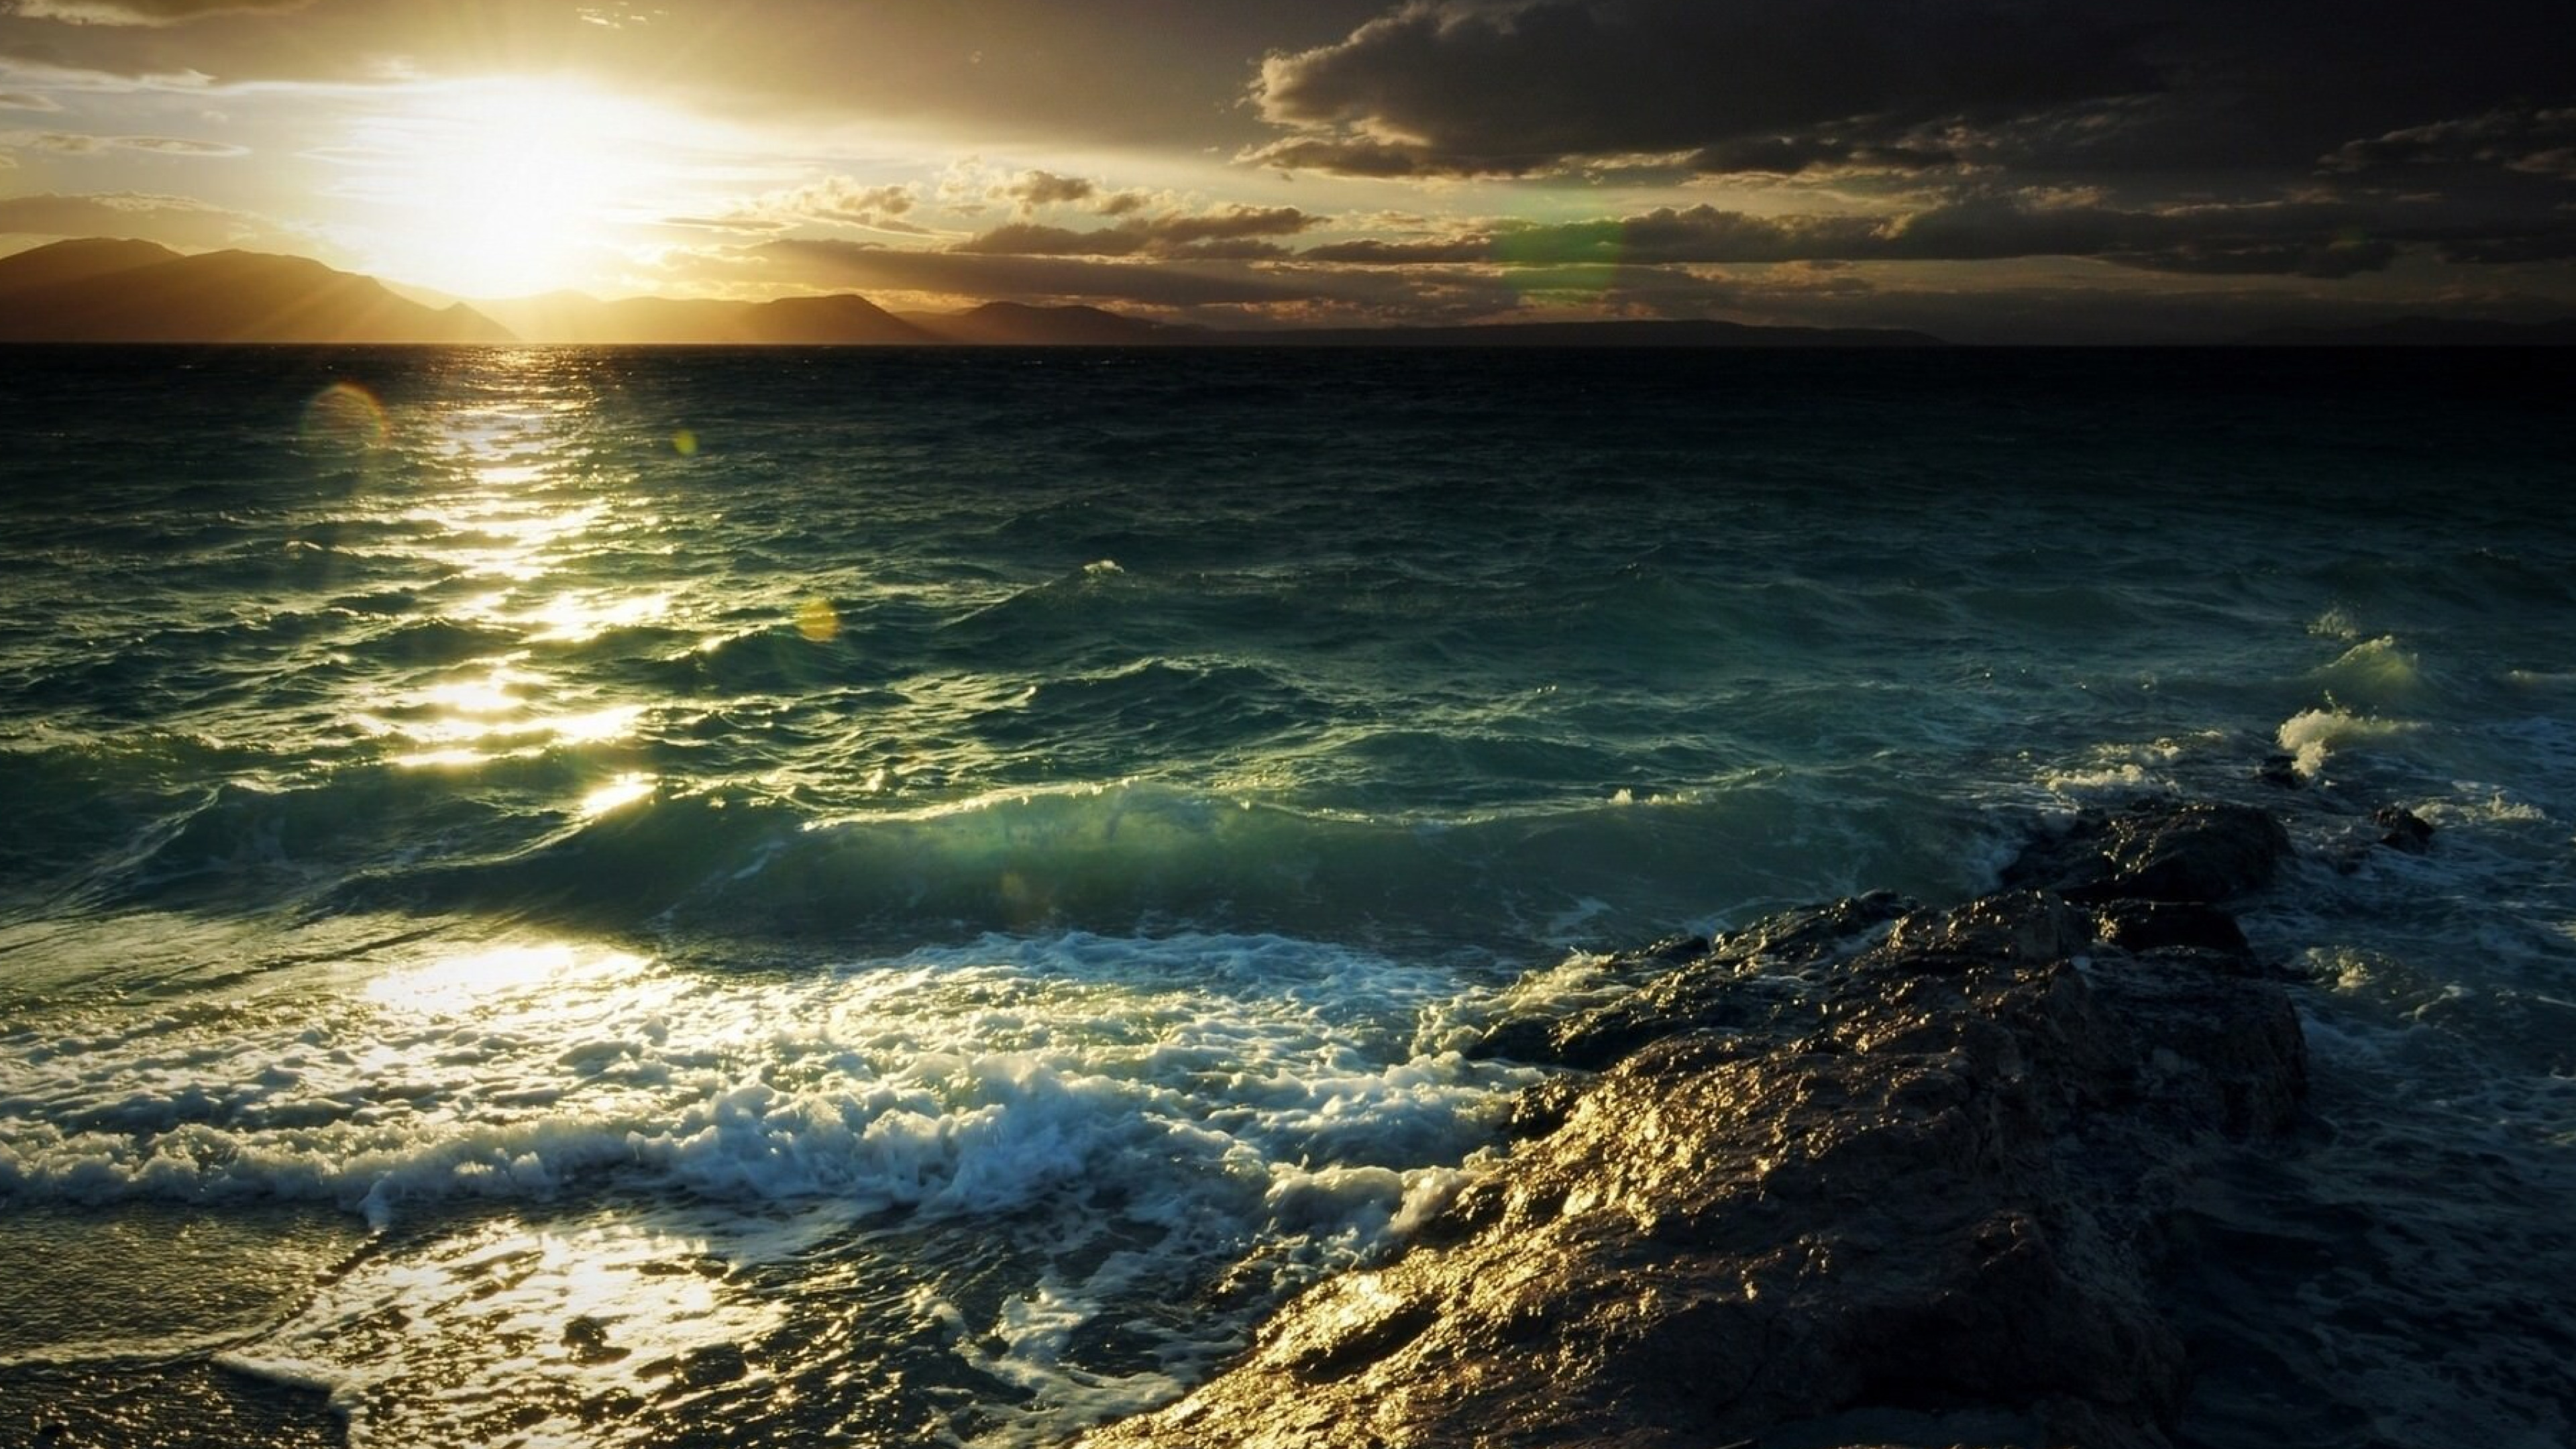 Ocean Waves Crashing on Shore During Sunset. Wallpaper in 3840x2160 Resolution